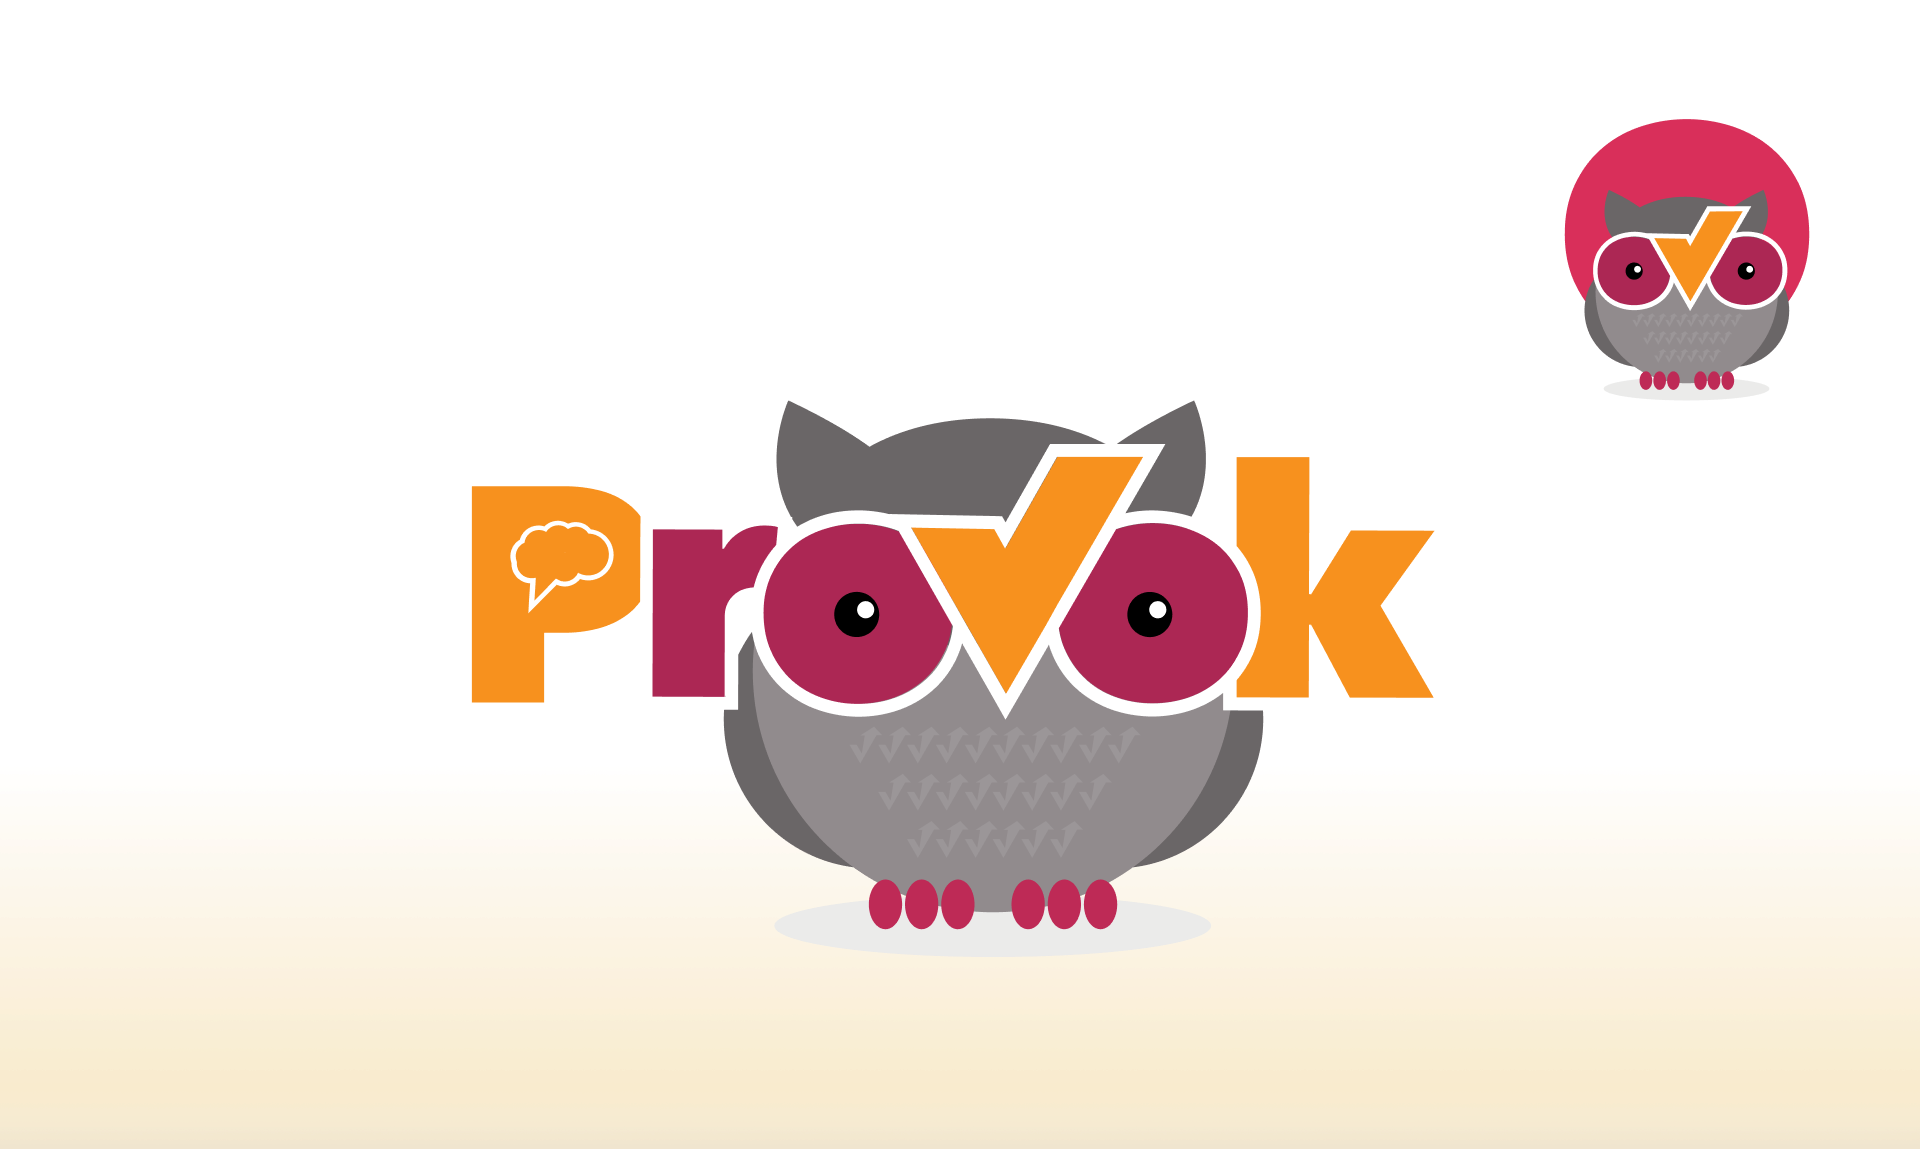 PVK Personagem Prof. Provok